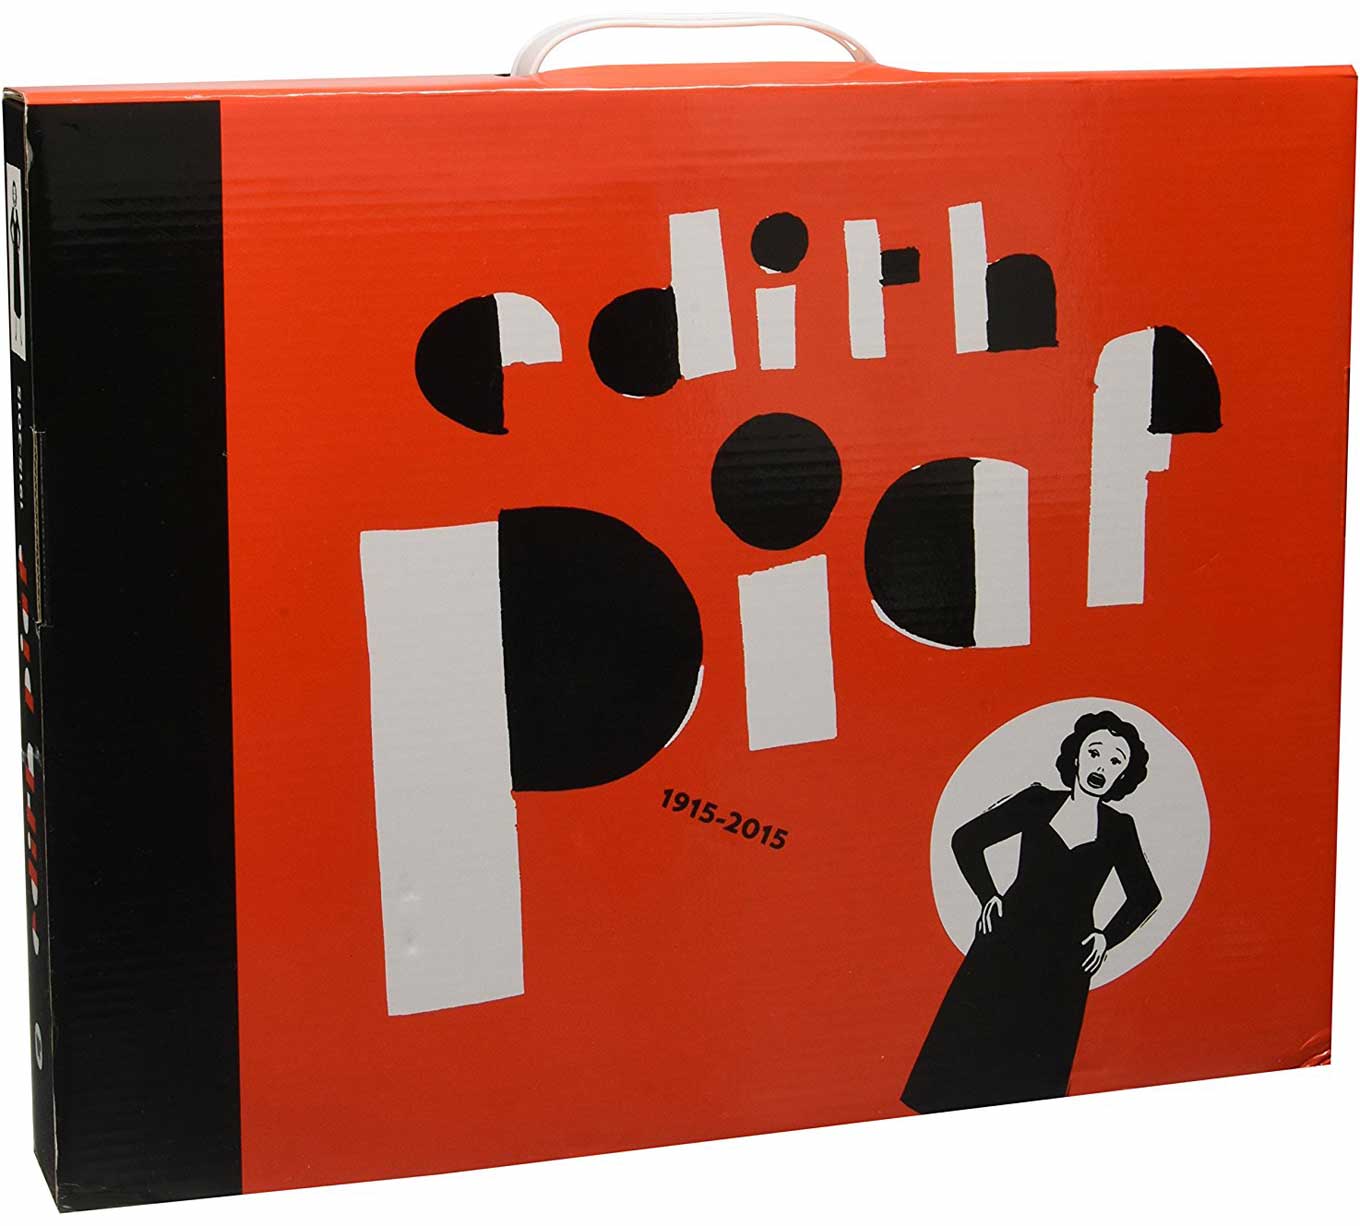 “Edith Piaf 1915-2015” Box Set front view